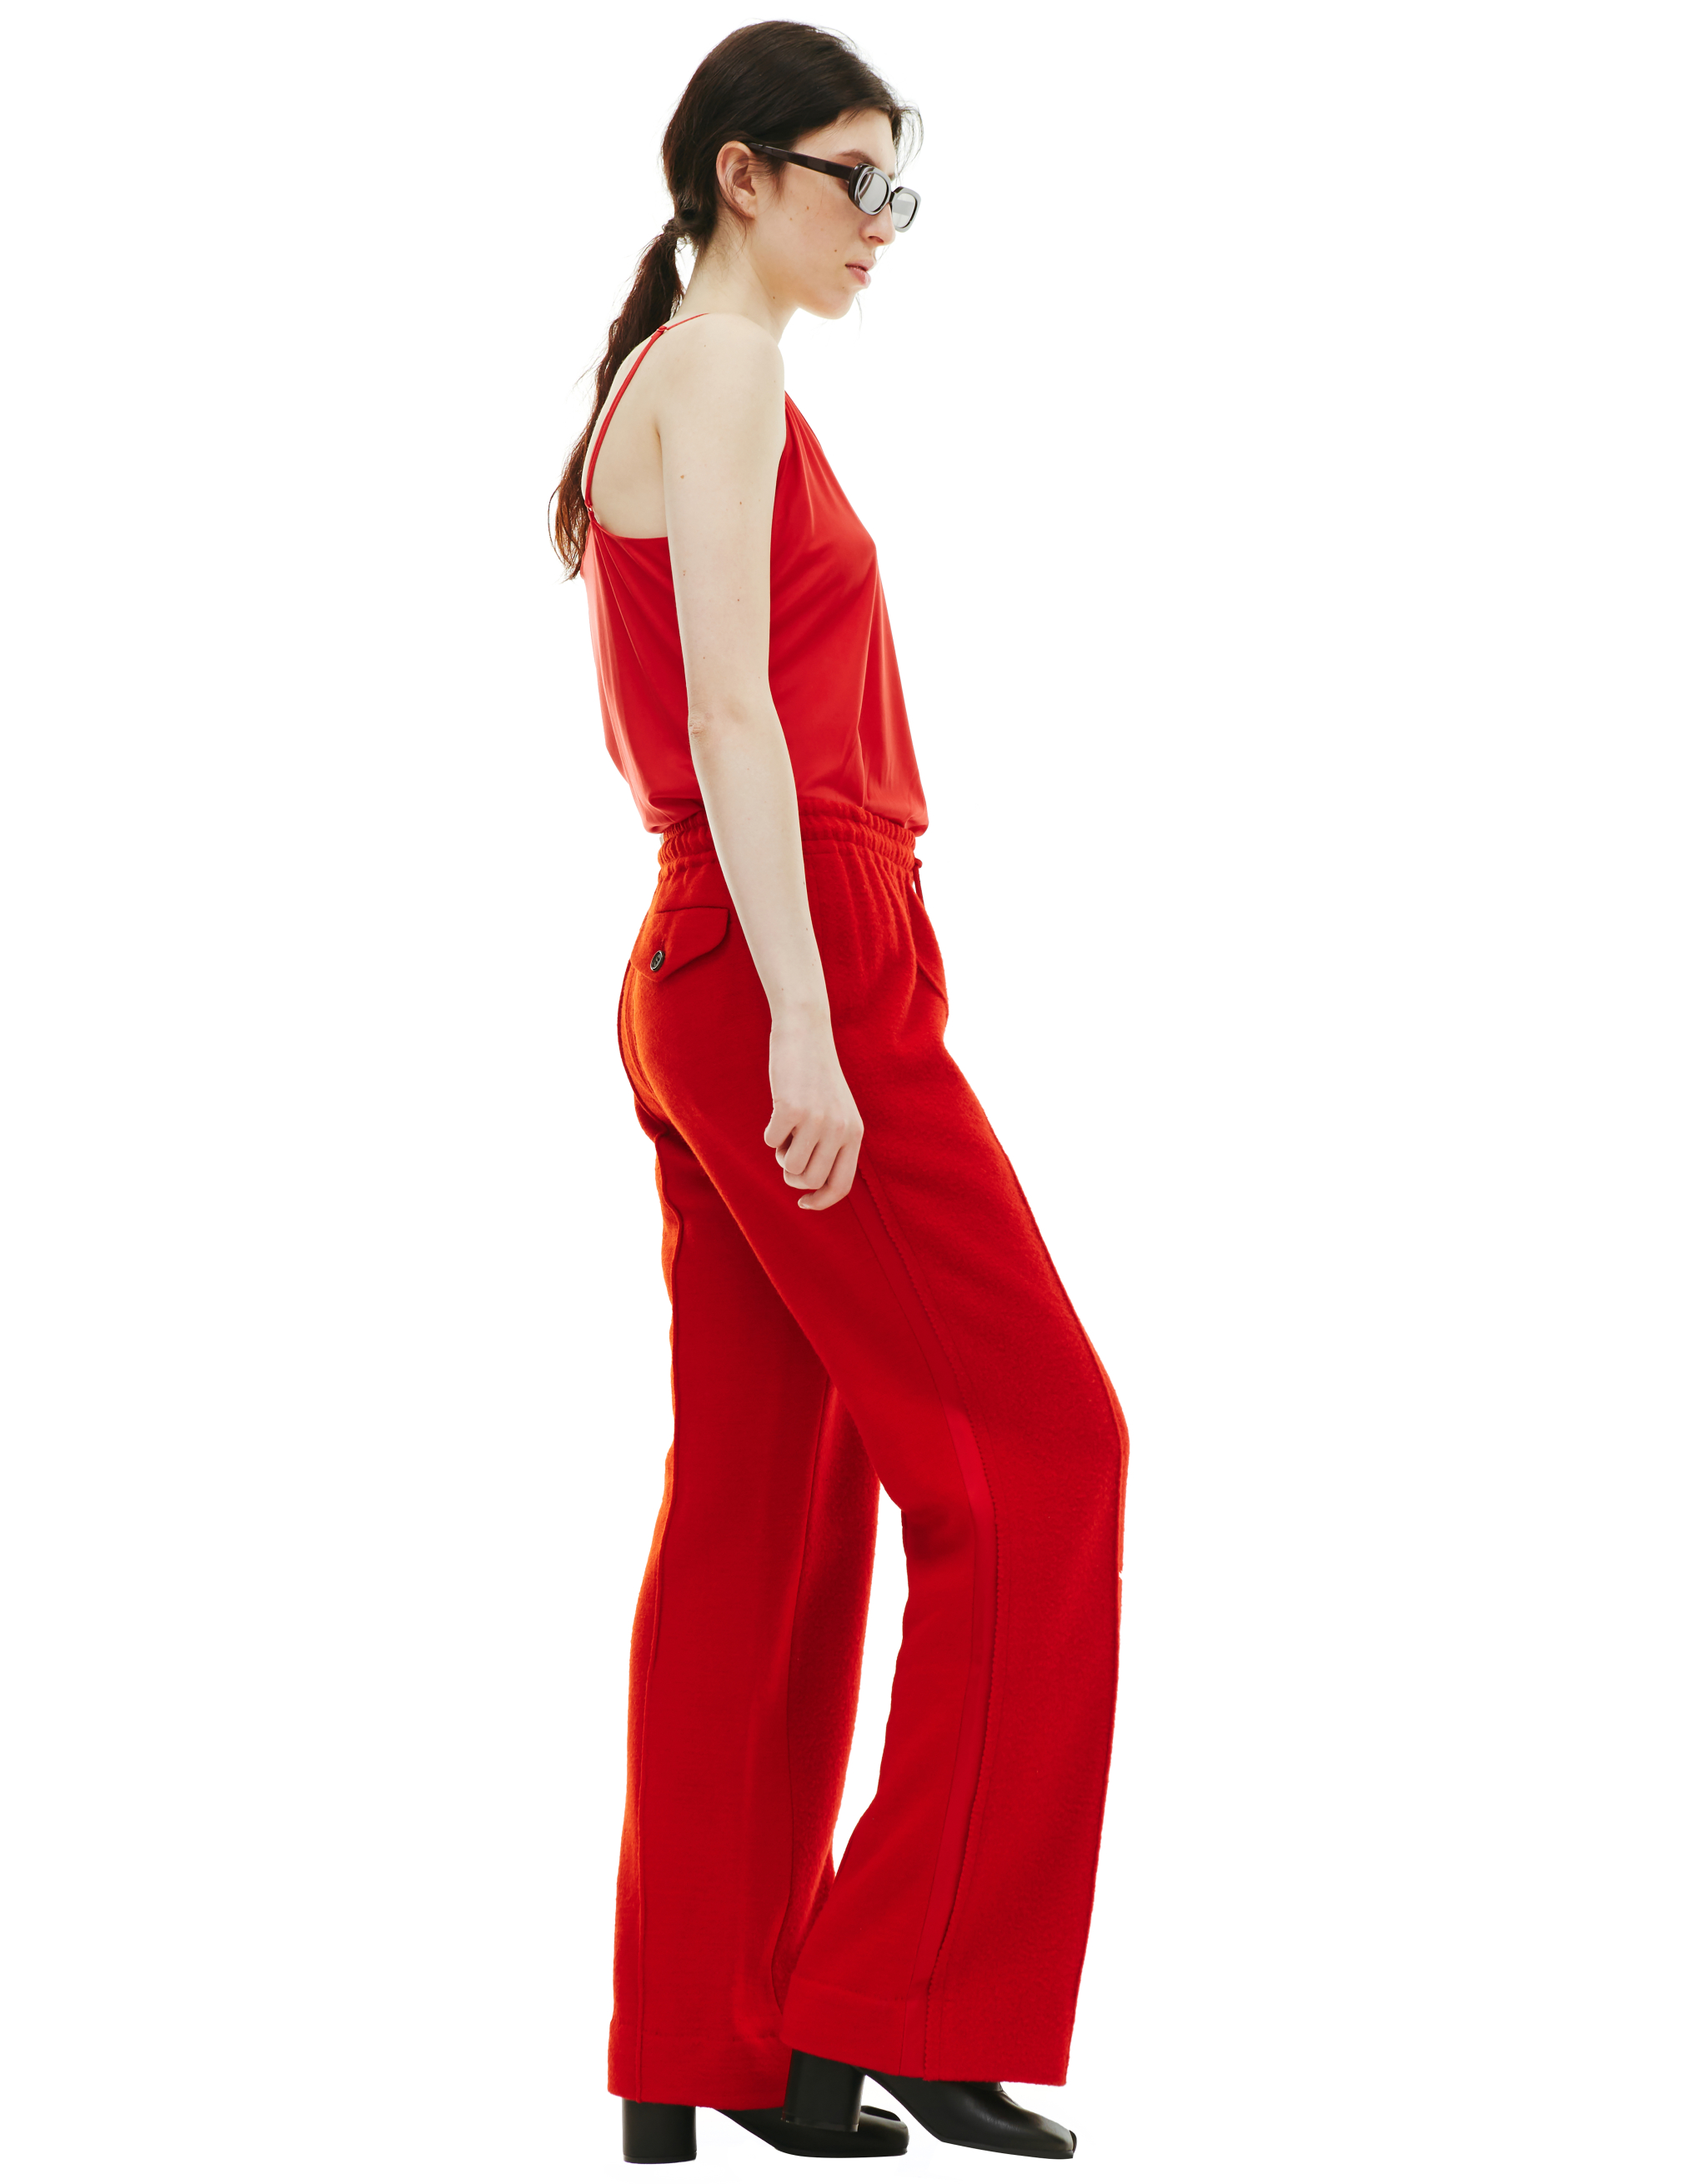 Красные шерстяные брюки Undercover UCX1503/red, размер 3;2 UCX1503/red - фото 2